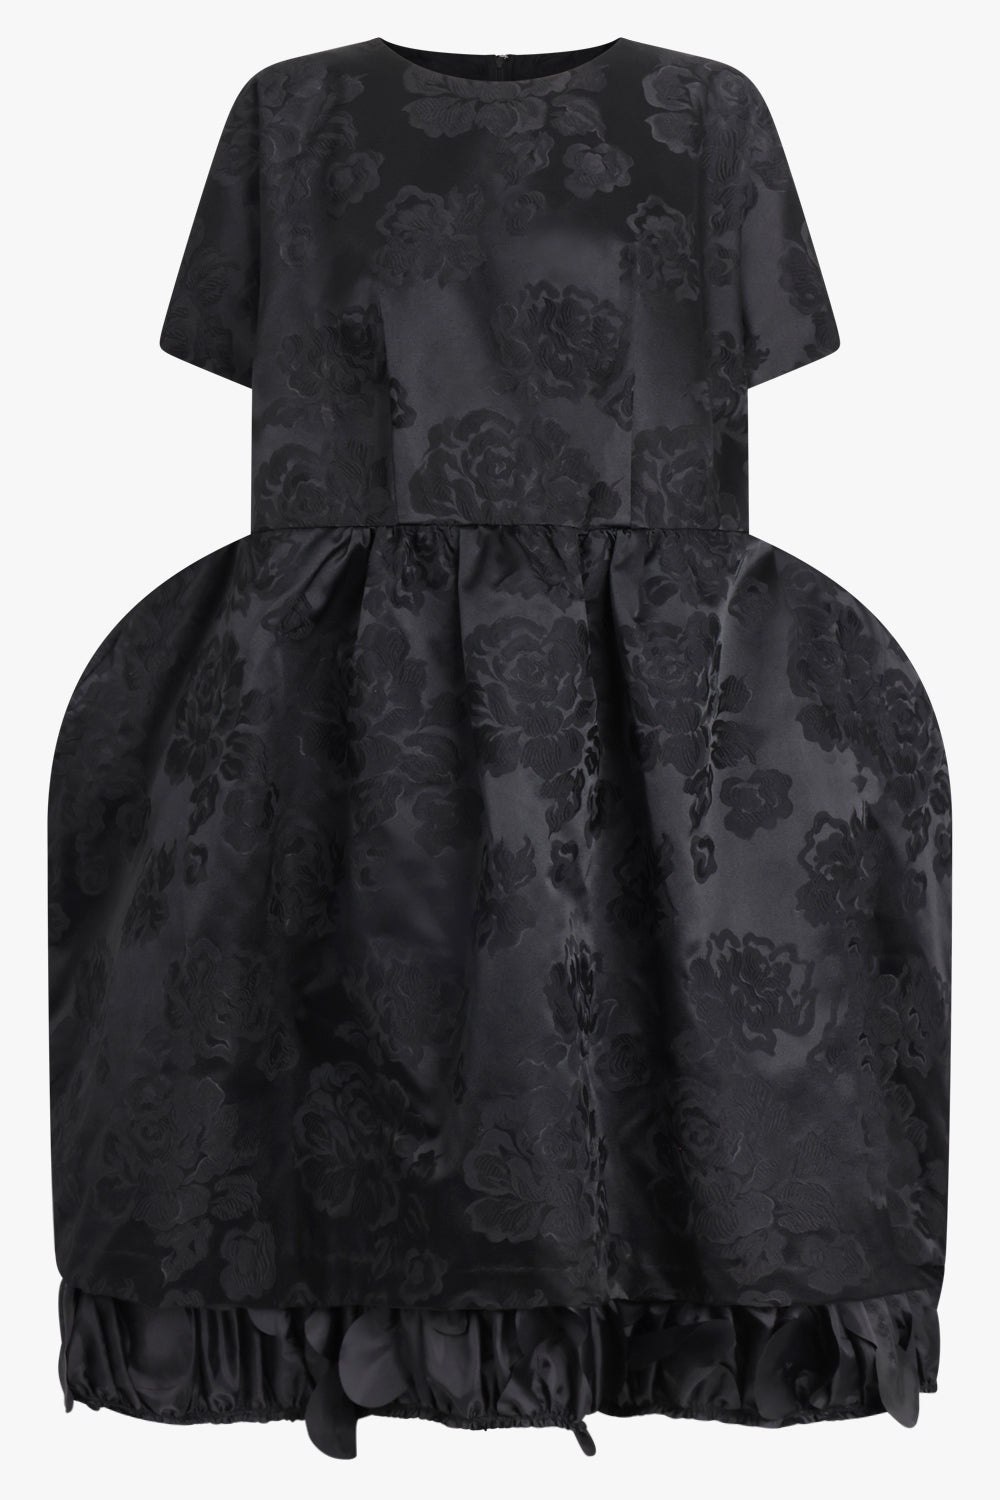 FLORAL PATTERN JACQUARD DRESS | BLACK - 1